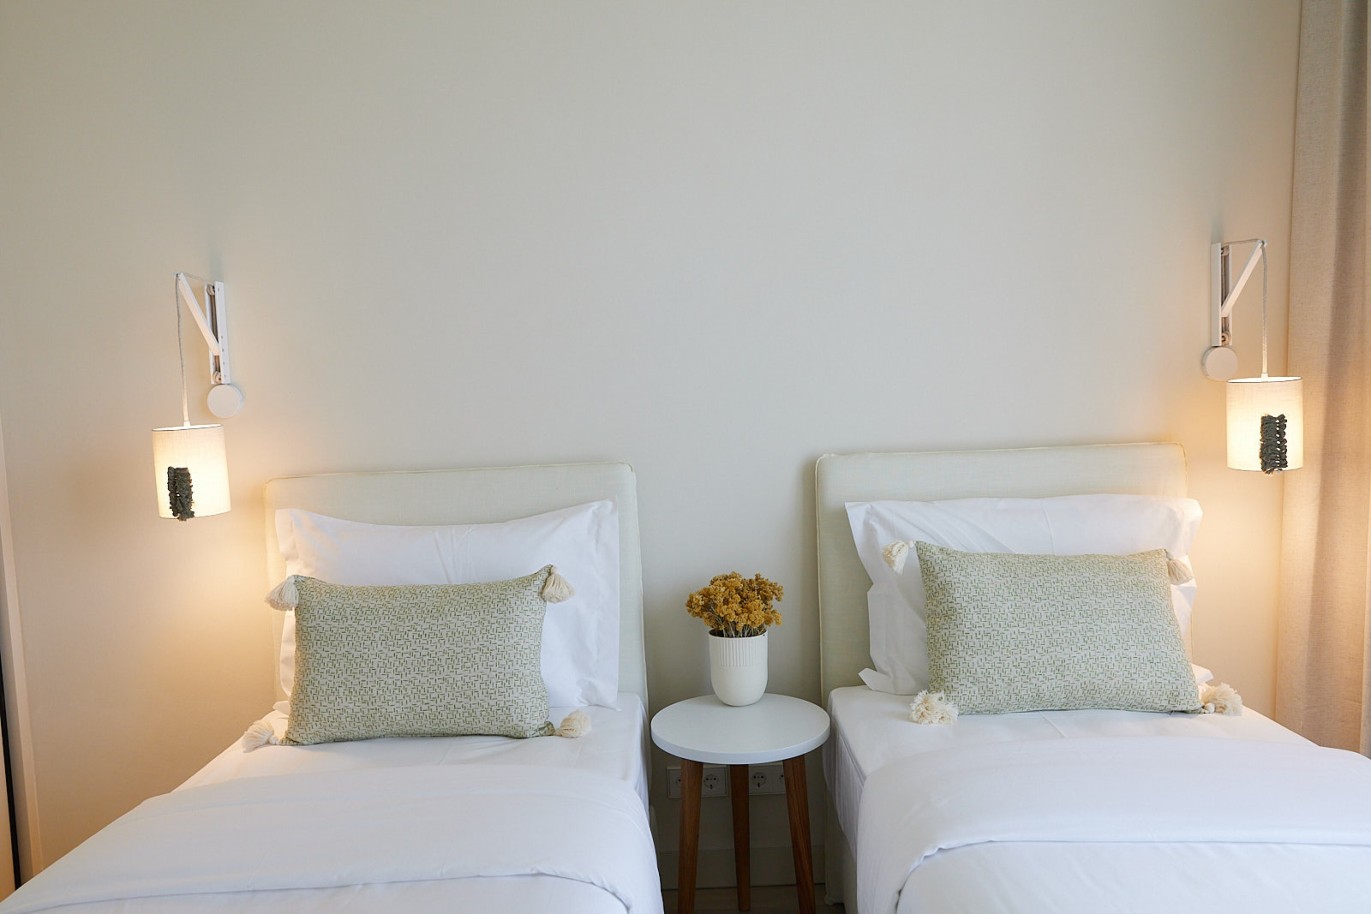 2 bedroom apartment in resort, for sale in Porches, Algarve_228731